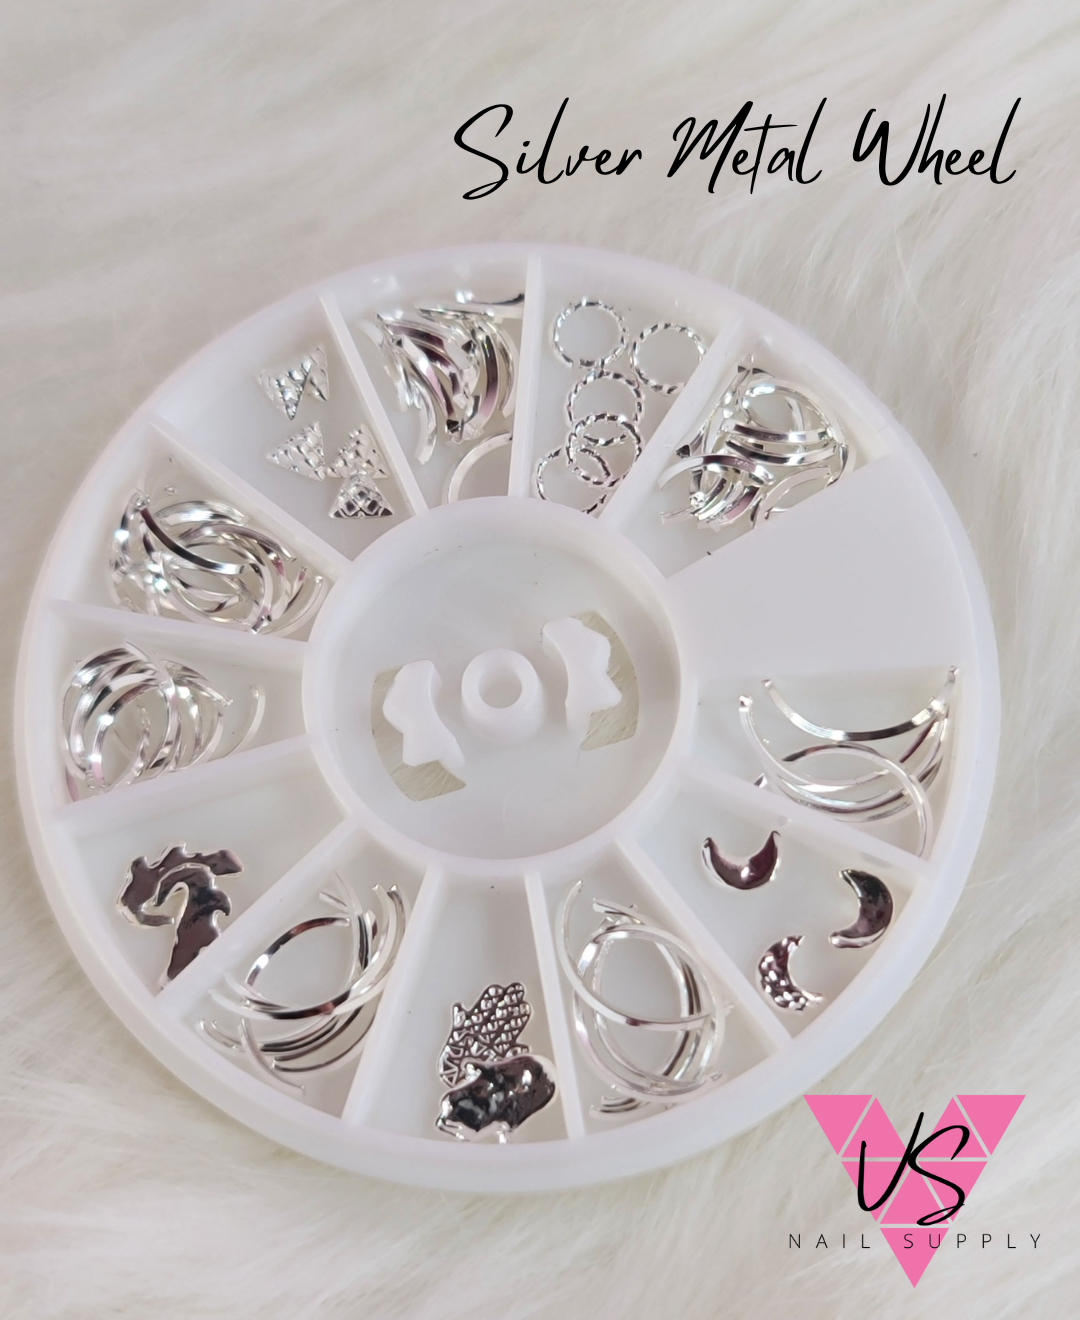 Silver Metal Wheel